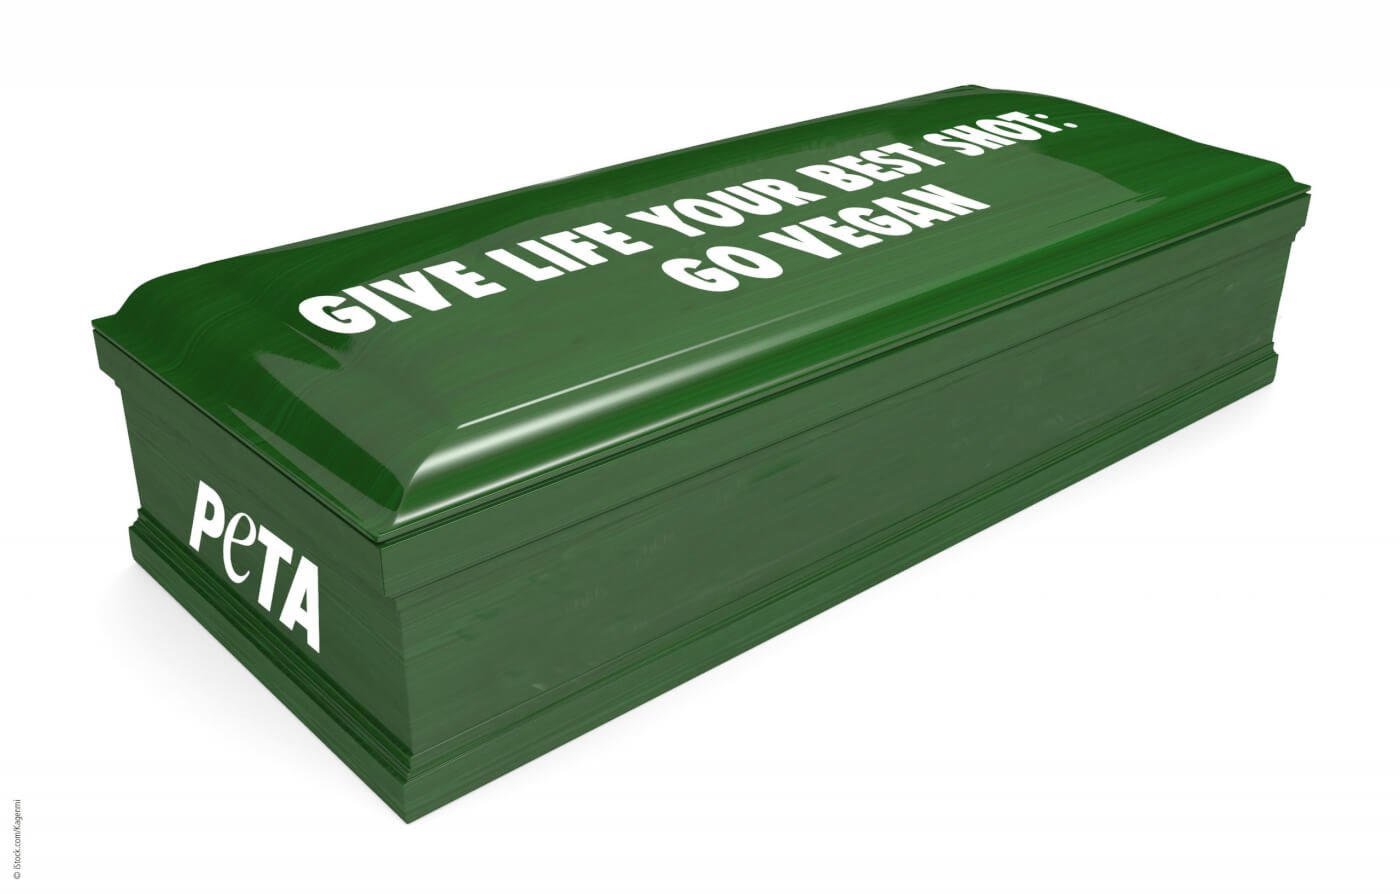 PETA Coffin Image "Give Live Your Best Shot: Go Vegan"